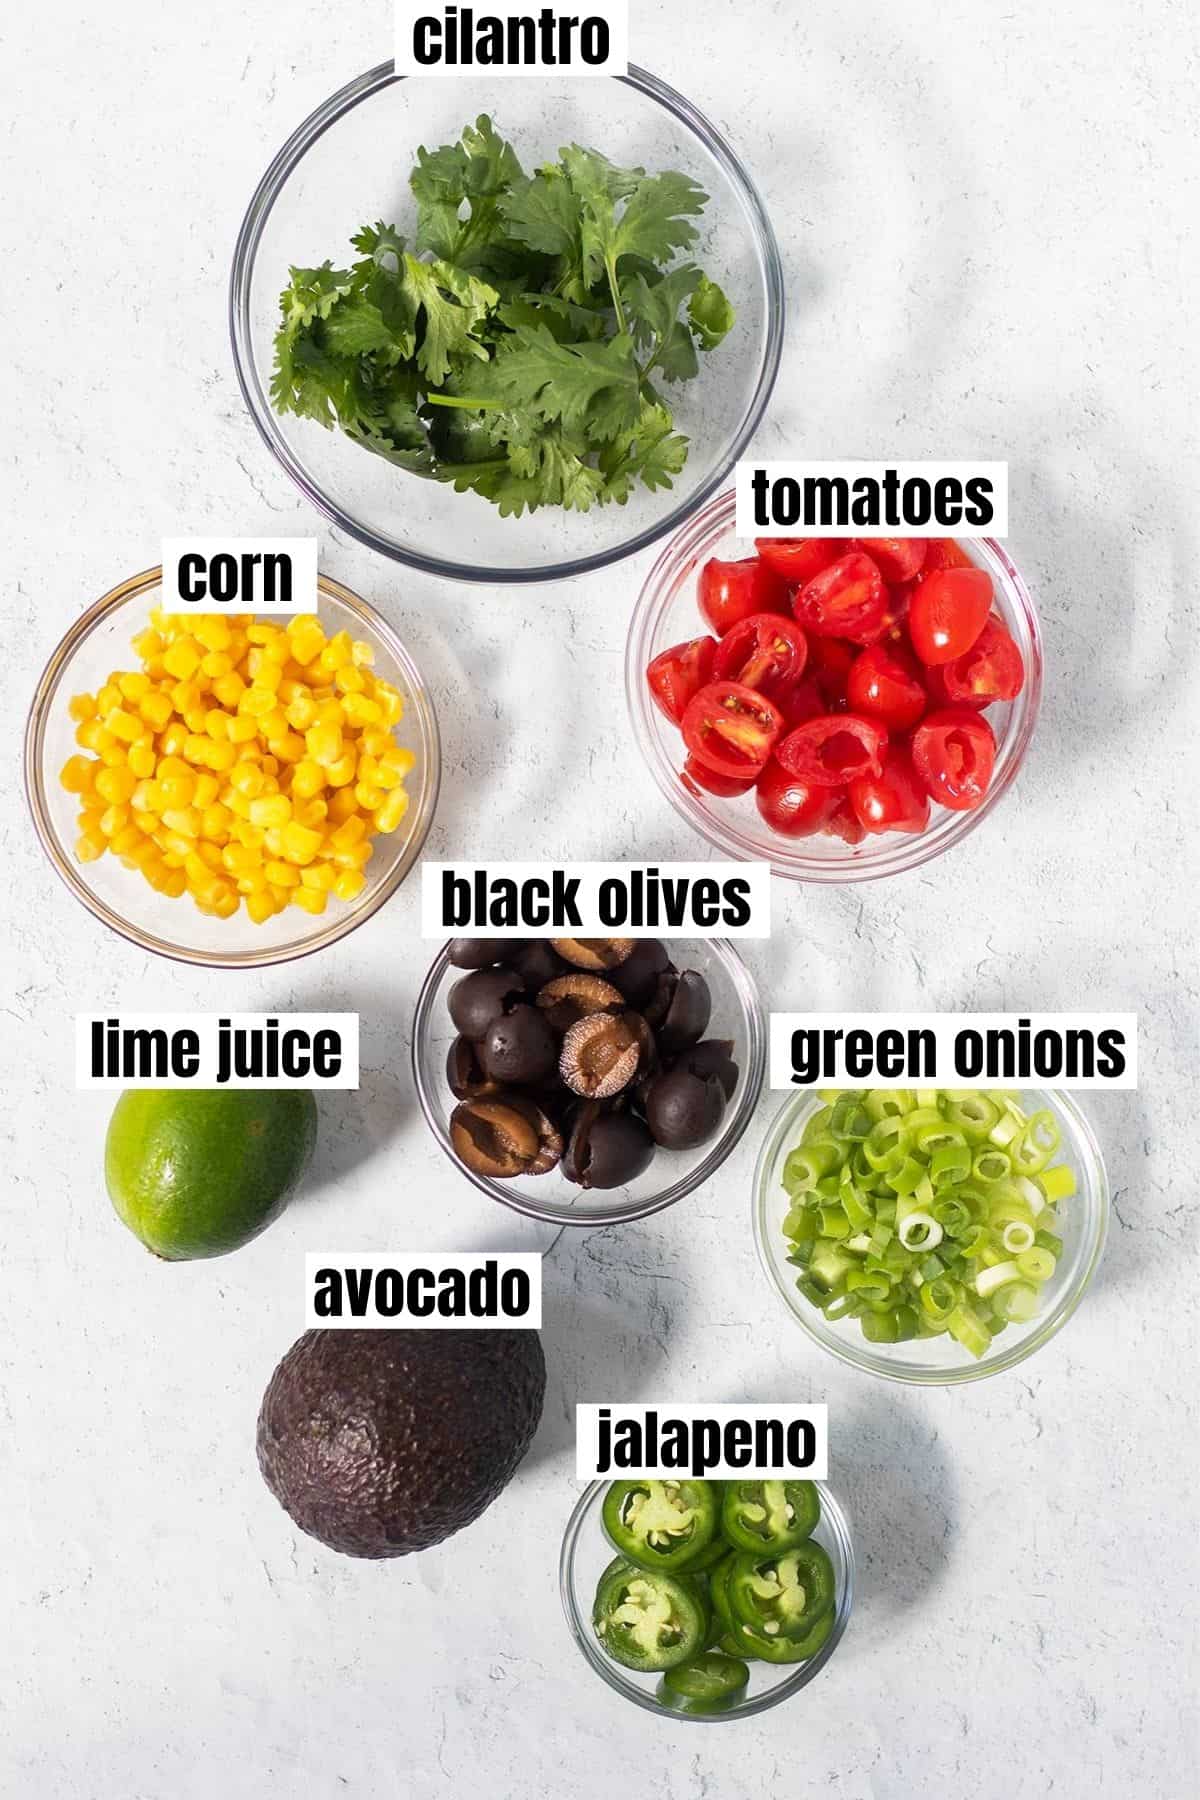 cilantro, corn, grape tomatoes, black olives, lime juice, green onions, jalapeno